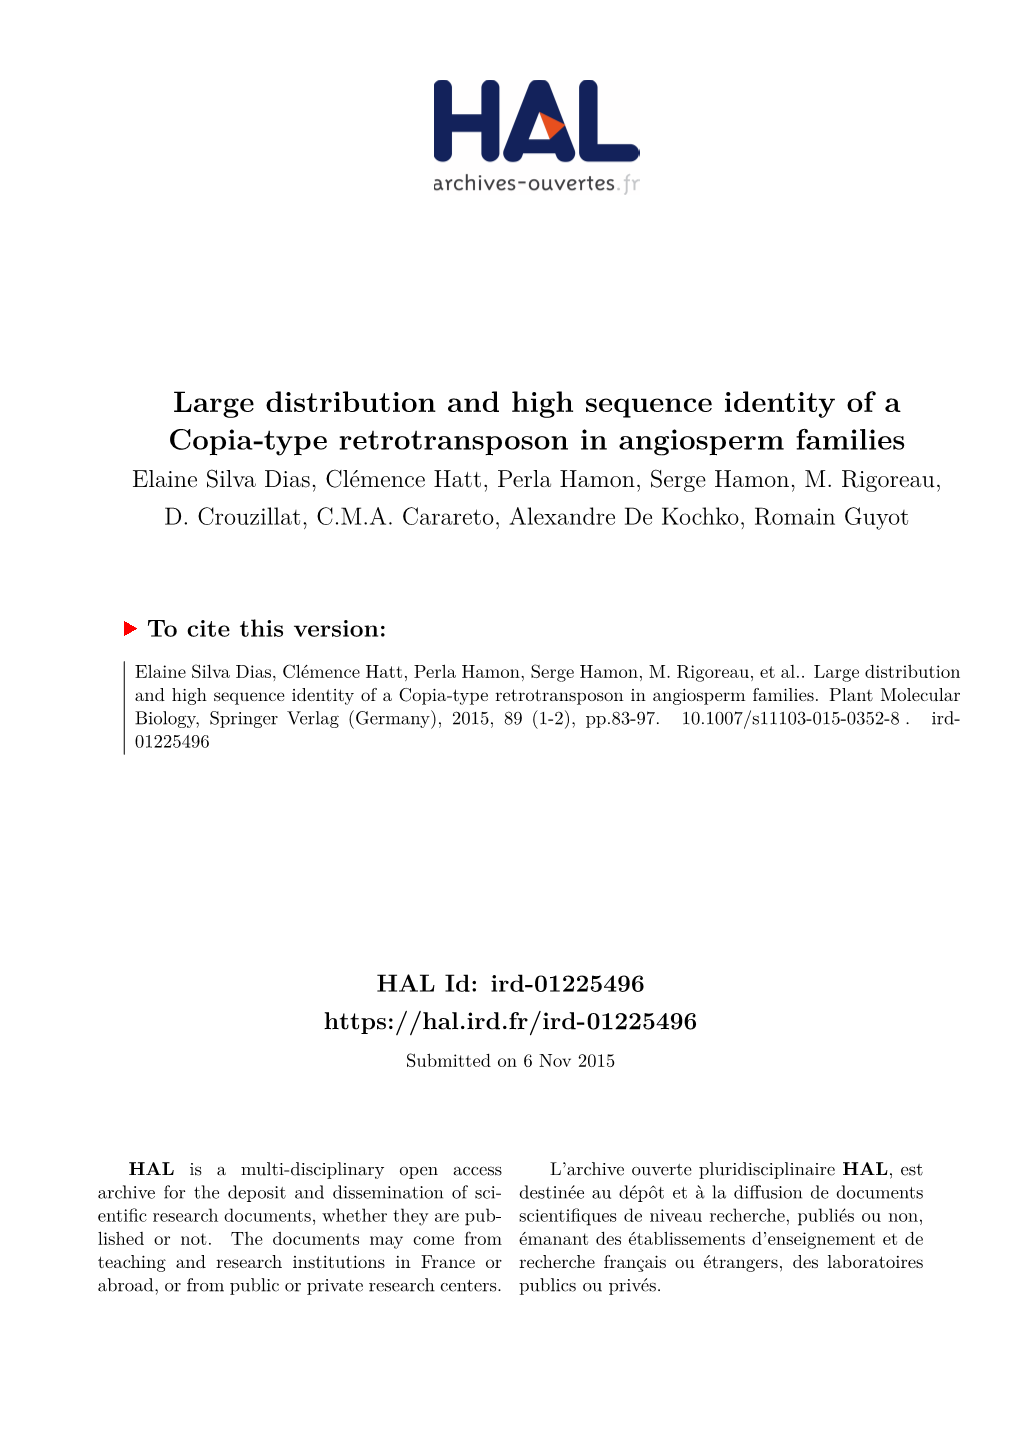 Large Distribution and High Sequence Identity of a Copia‑Type Retrotransposon in Angiosperm Families Elaine Silva Dias, Clémence Hatt, Perla Hamon, Serge Hamon, M